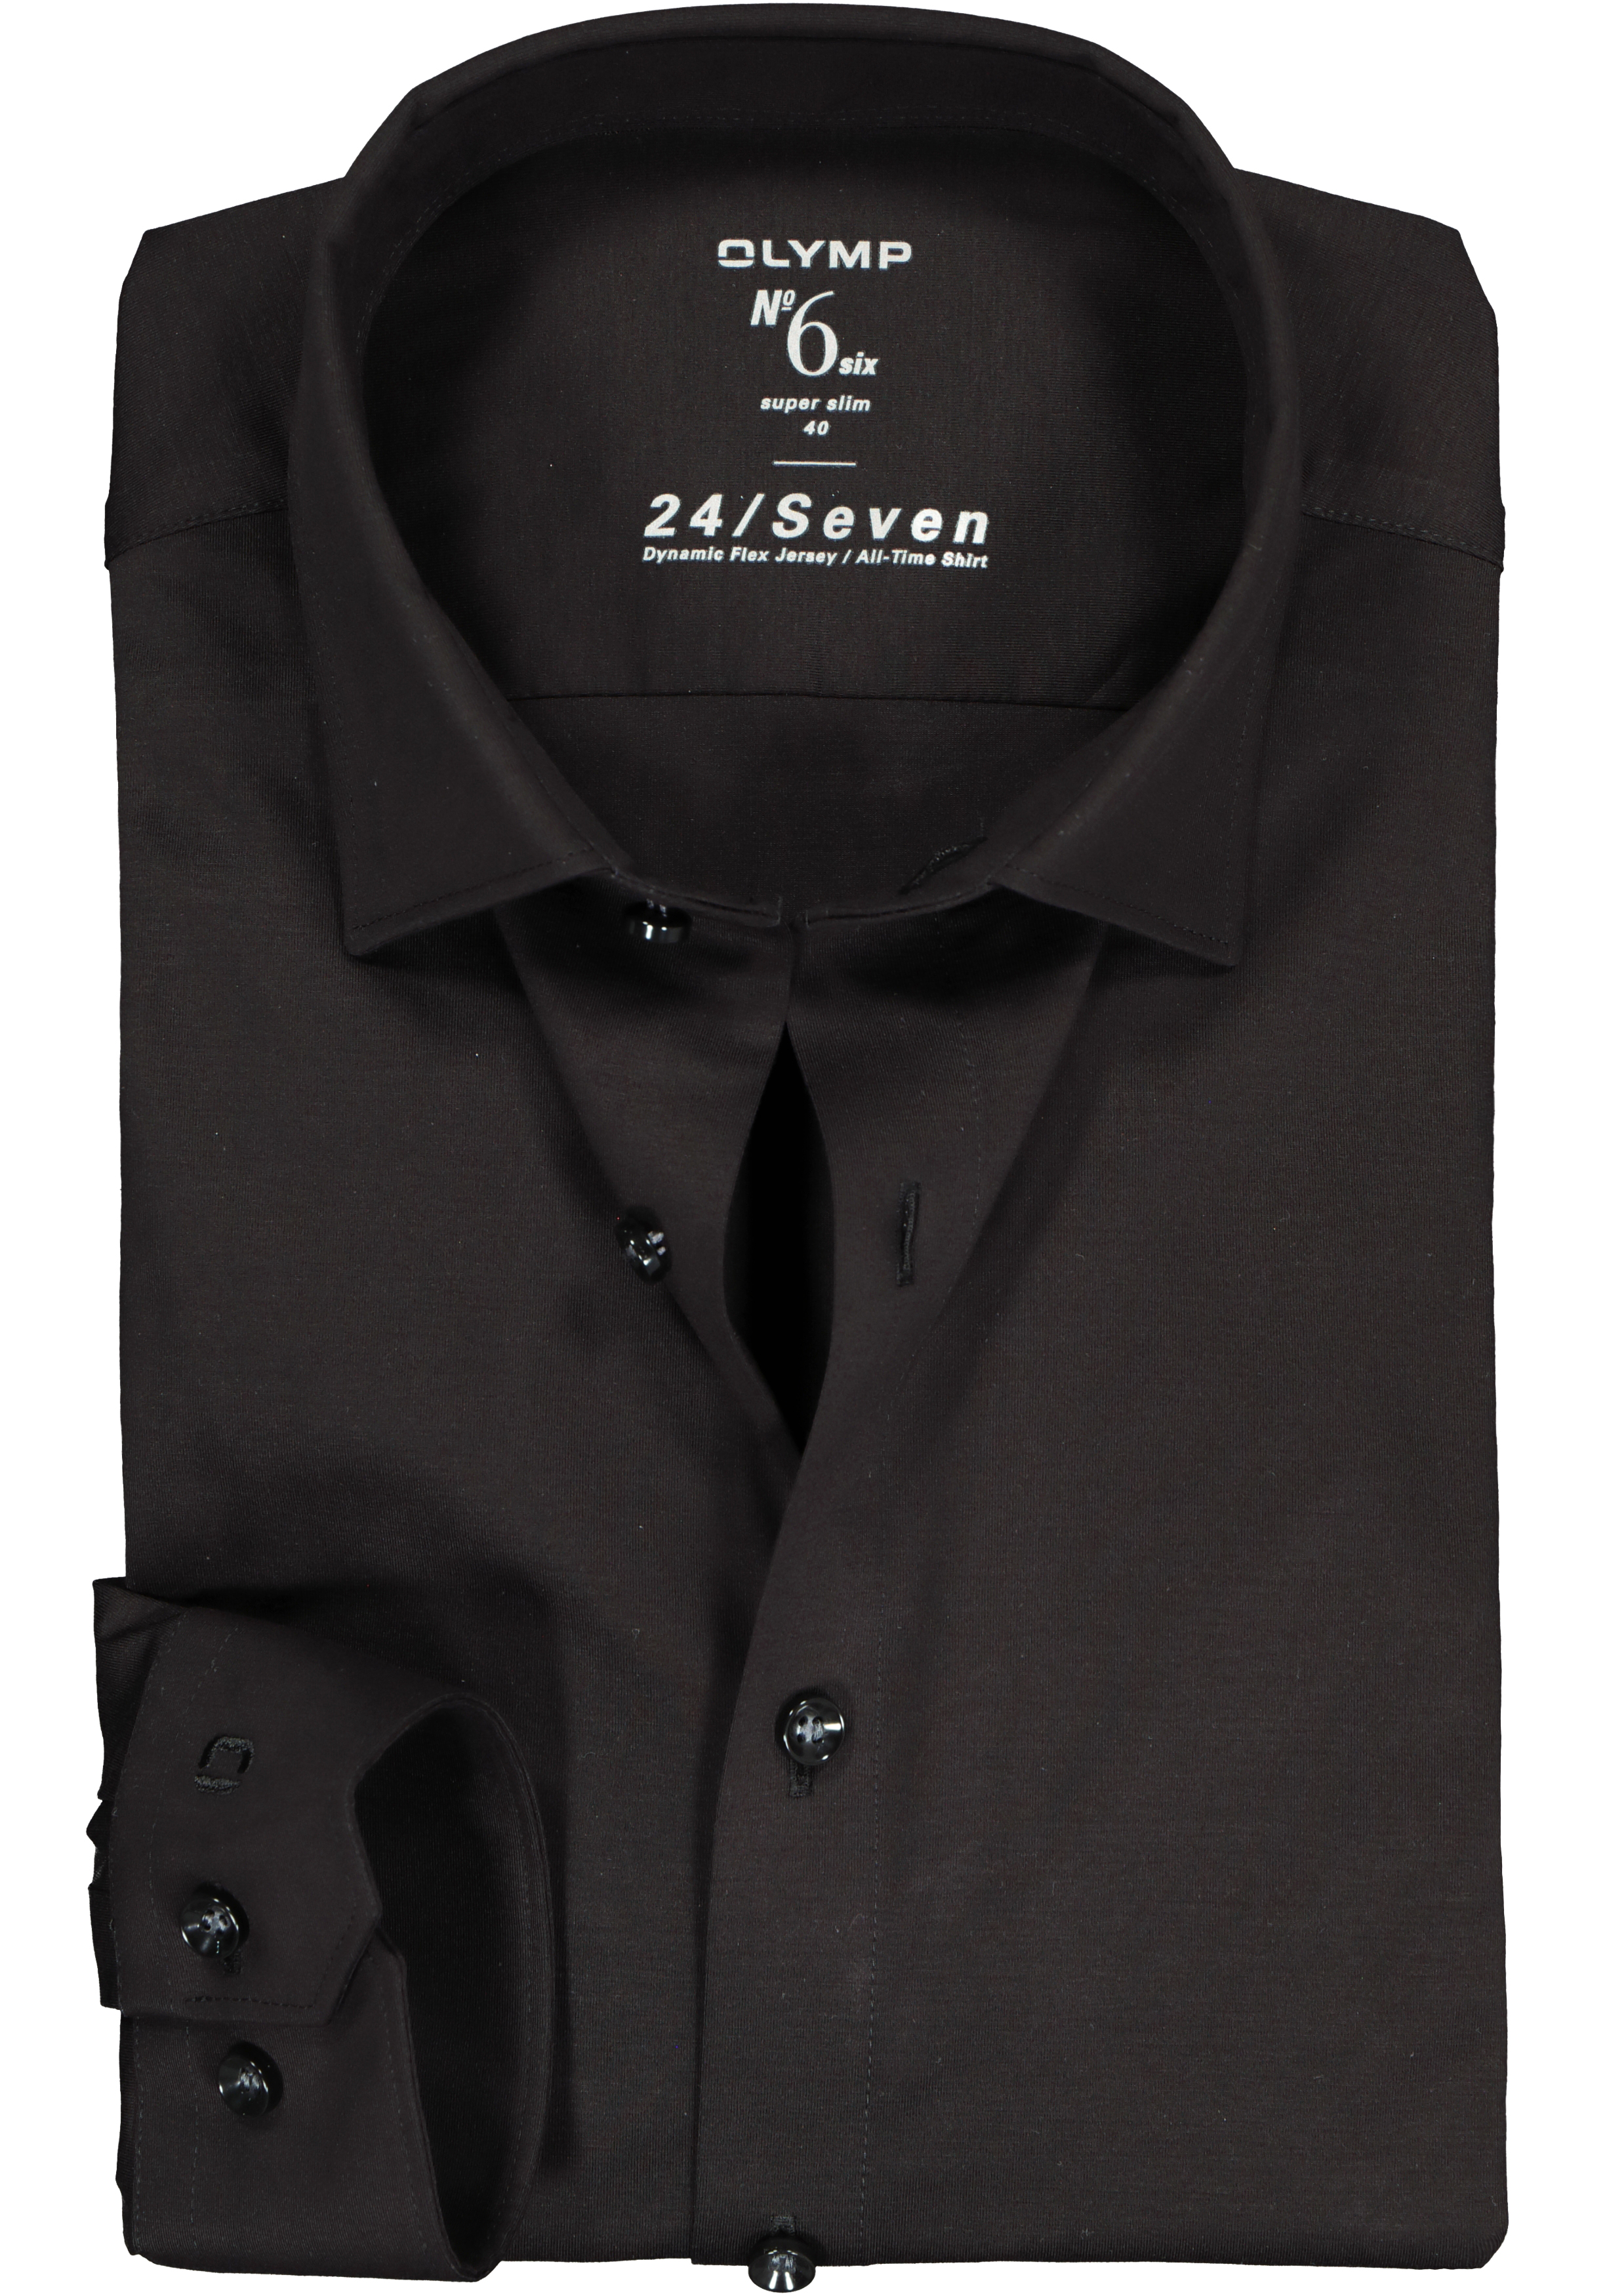 OLYMP No. Six 24/Seven super slim fit overhemd, tricot, zwart